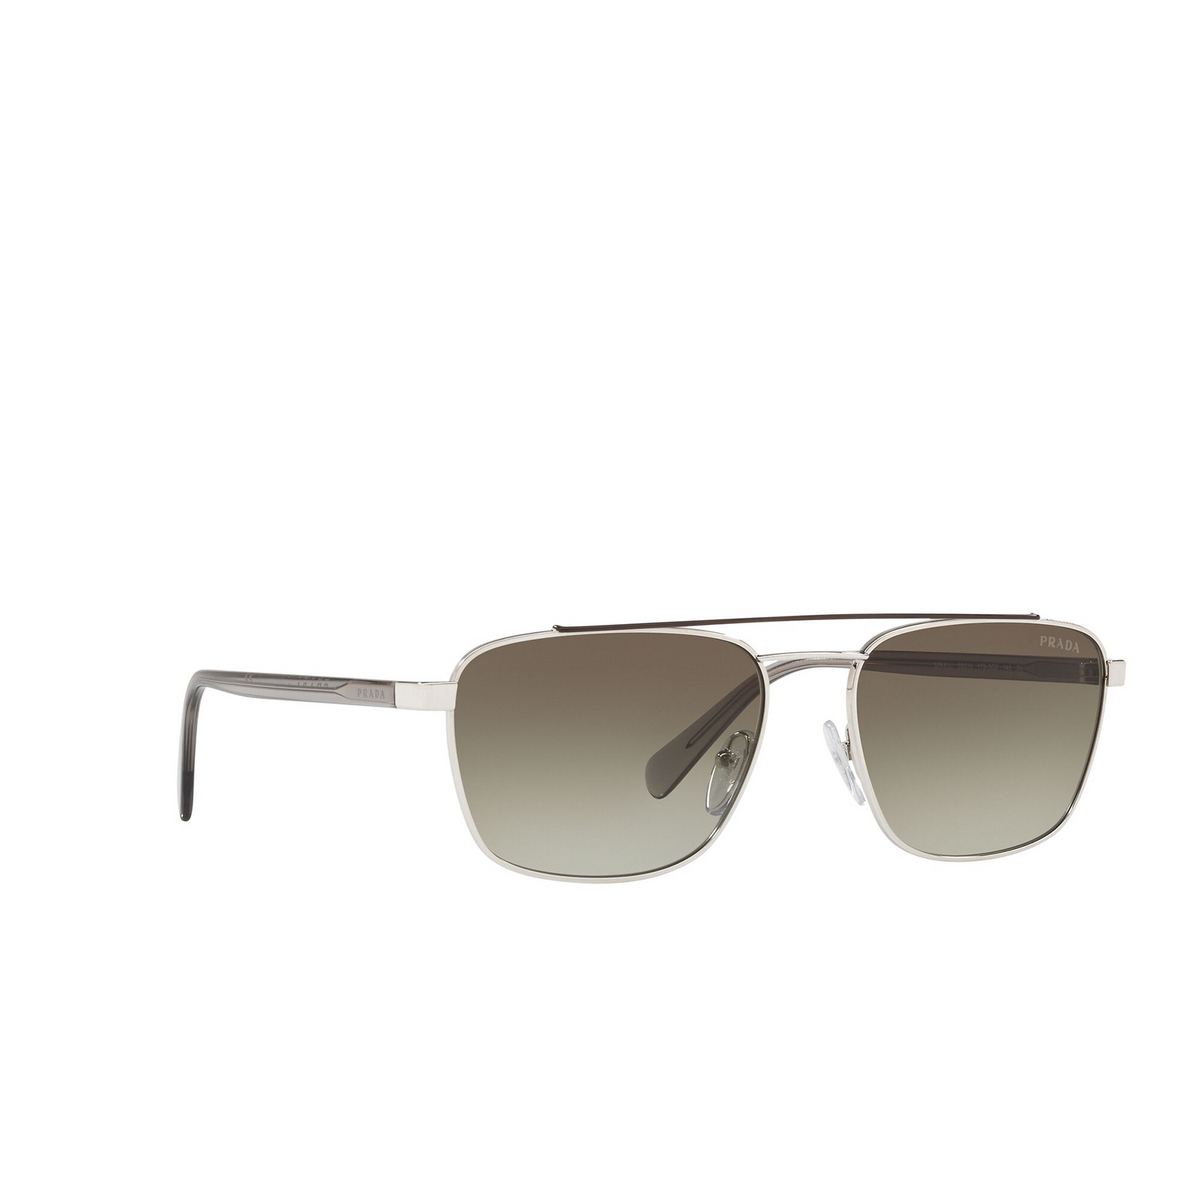 Prada® Square Sunglasses: Conceptual PR 61US color Brown / Silver Y7B5O2 - three-quarters view.